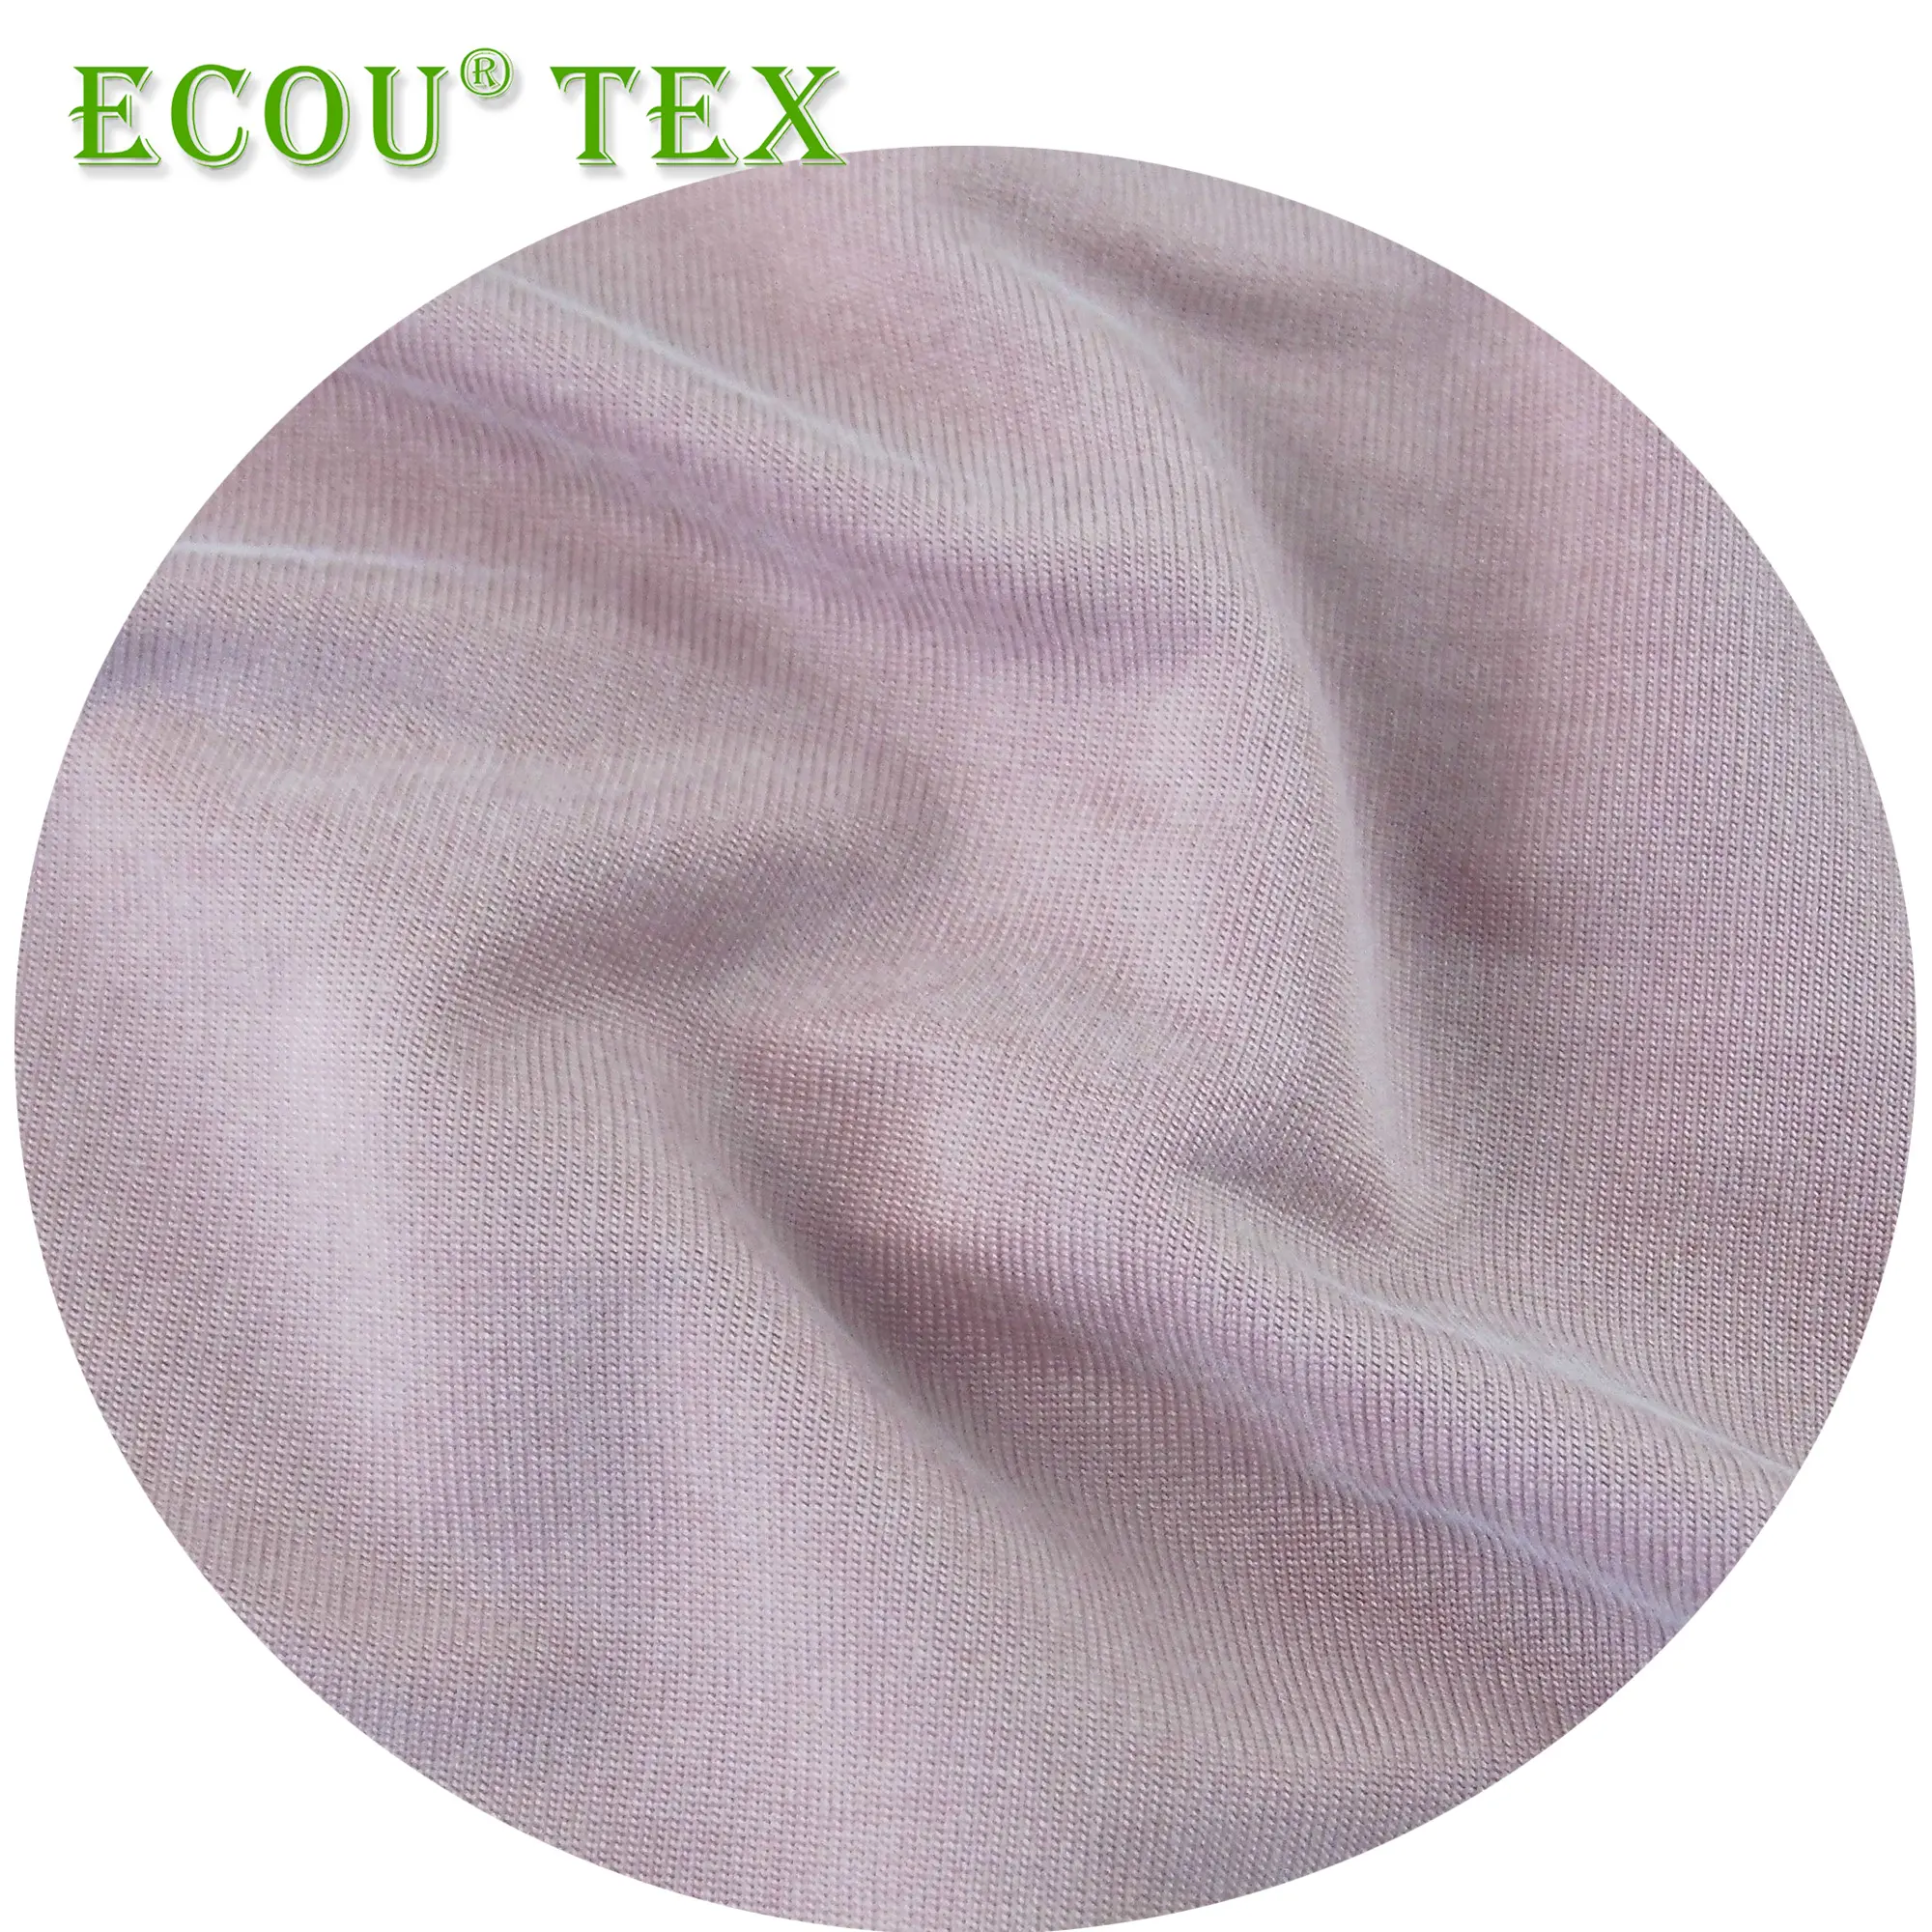 Oeko tex standard 100 유기 대나무 fabric 대 한 baby shirt andclothing as oeko tex standard 유기 대나무 fabric